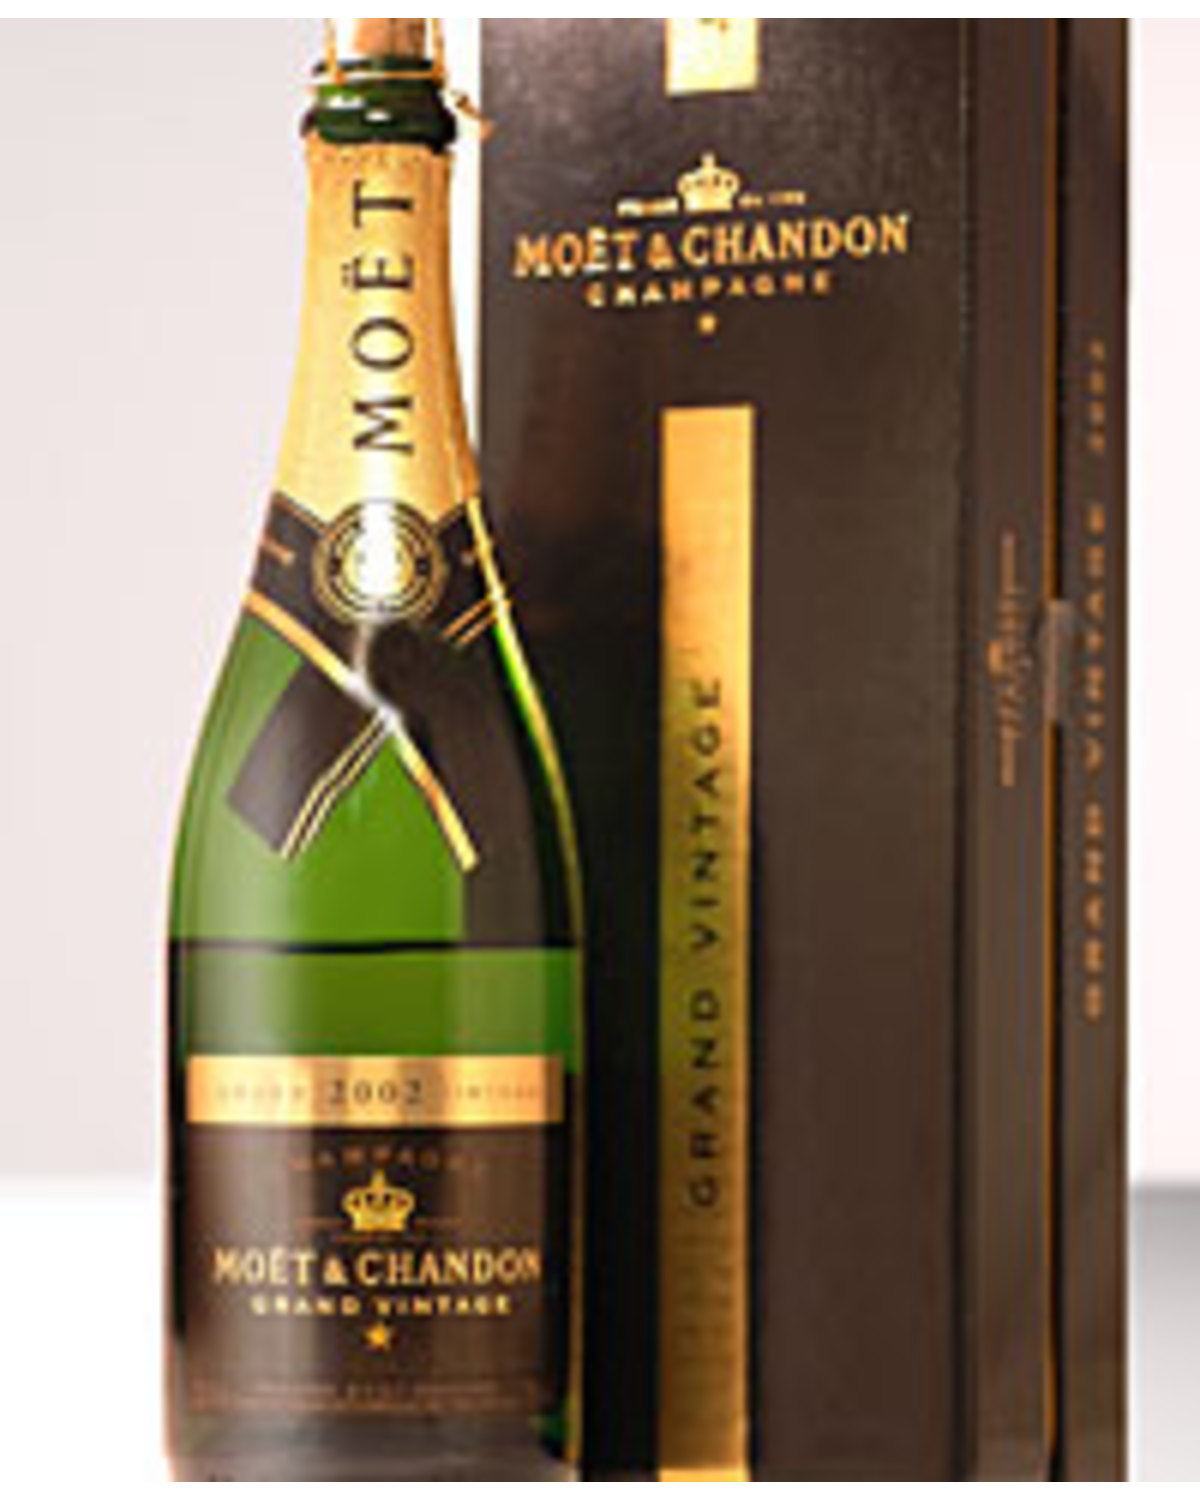 2002 Moët & Chandon Champagne Grand Vintage - CellarTracker